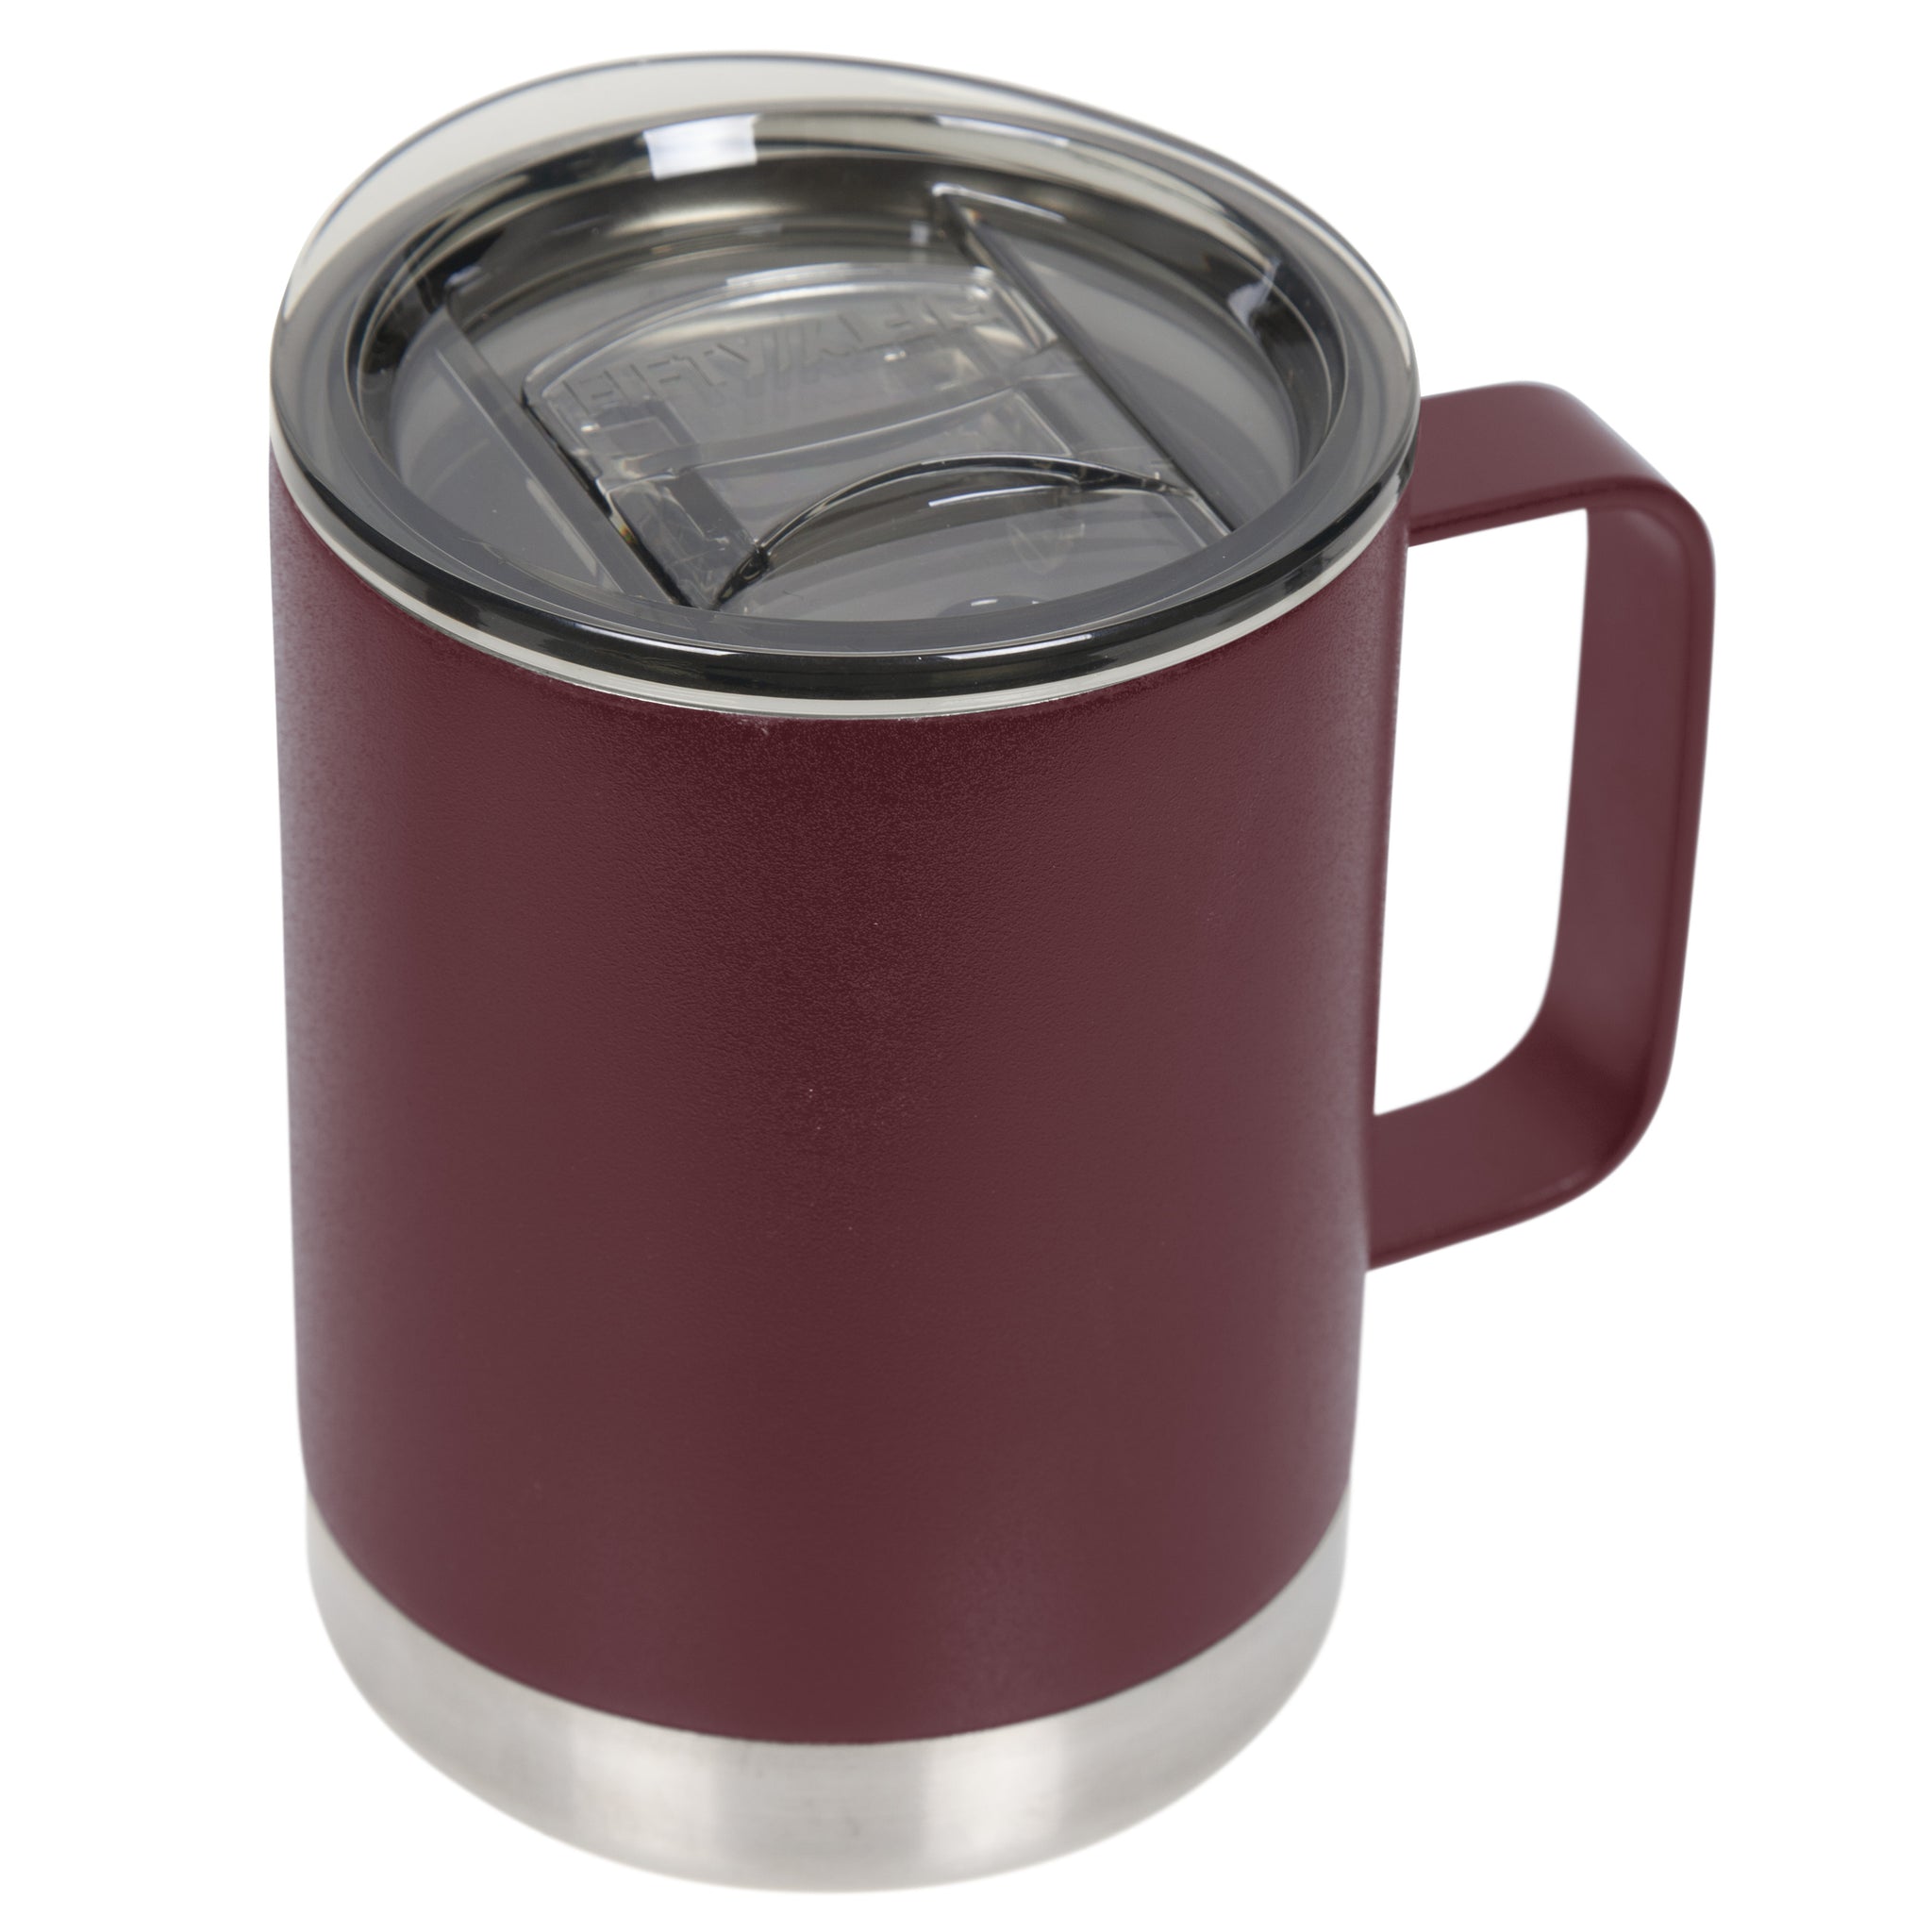 Custom Travel Coffee Mug - 14 oz Red Stainless Steel Mug with Handle